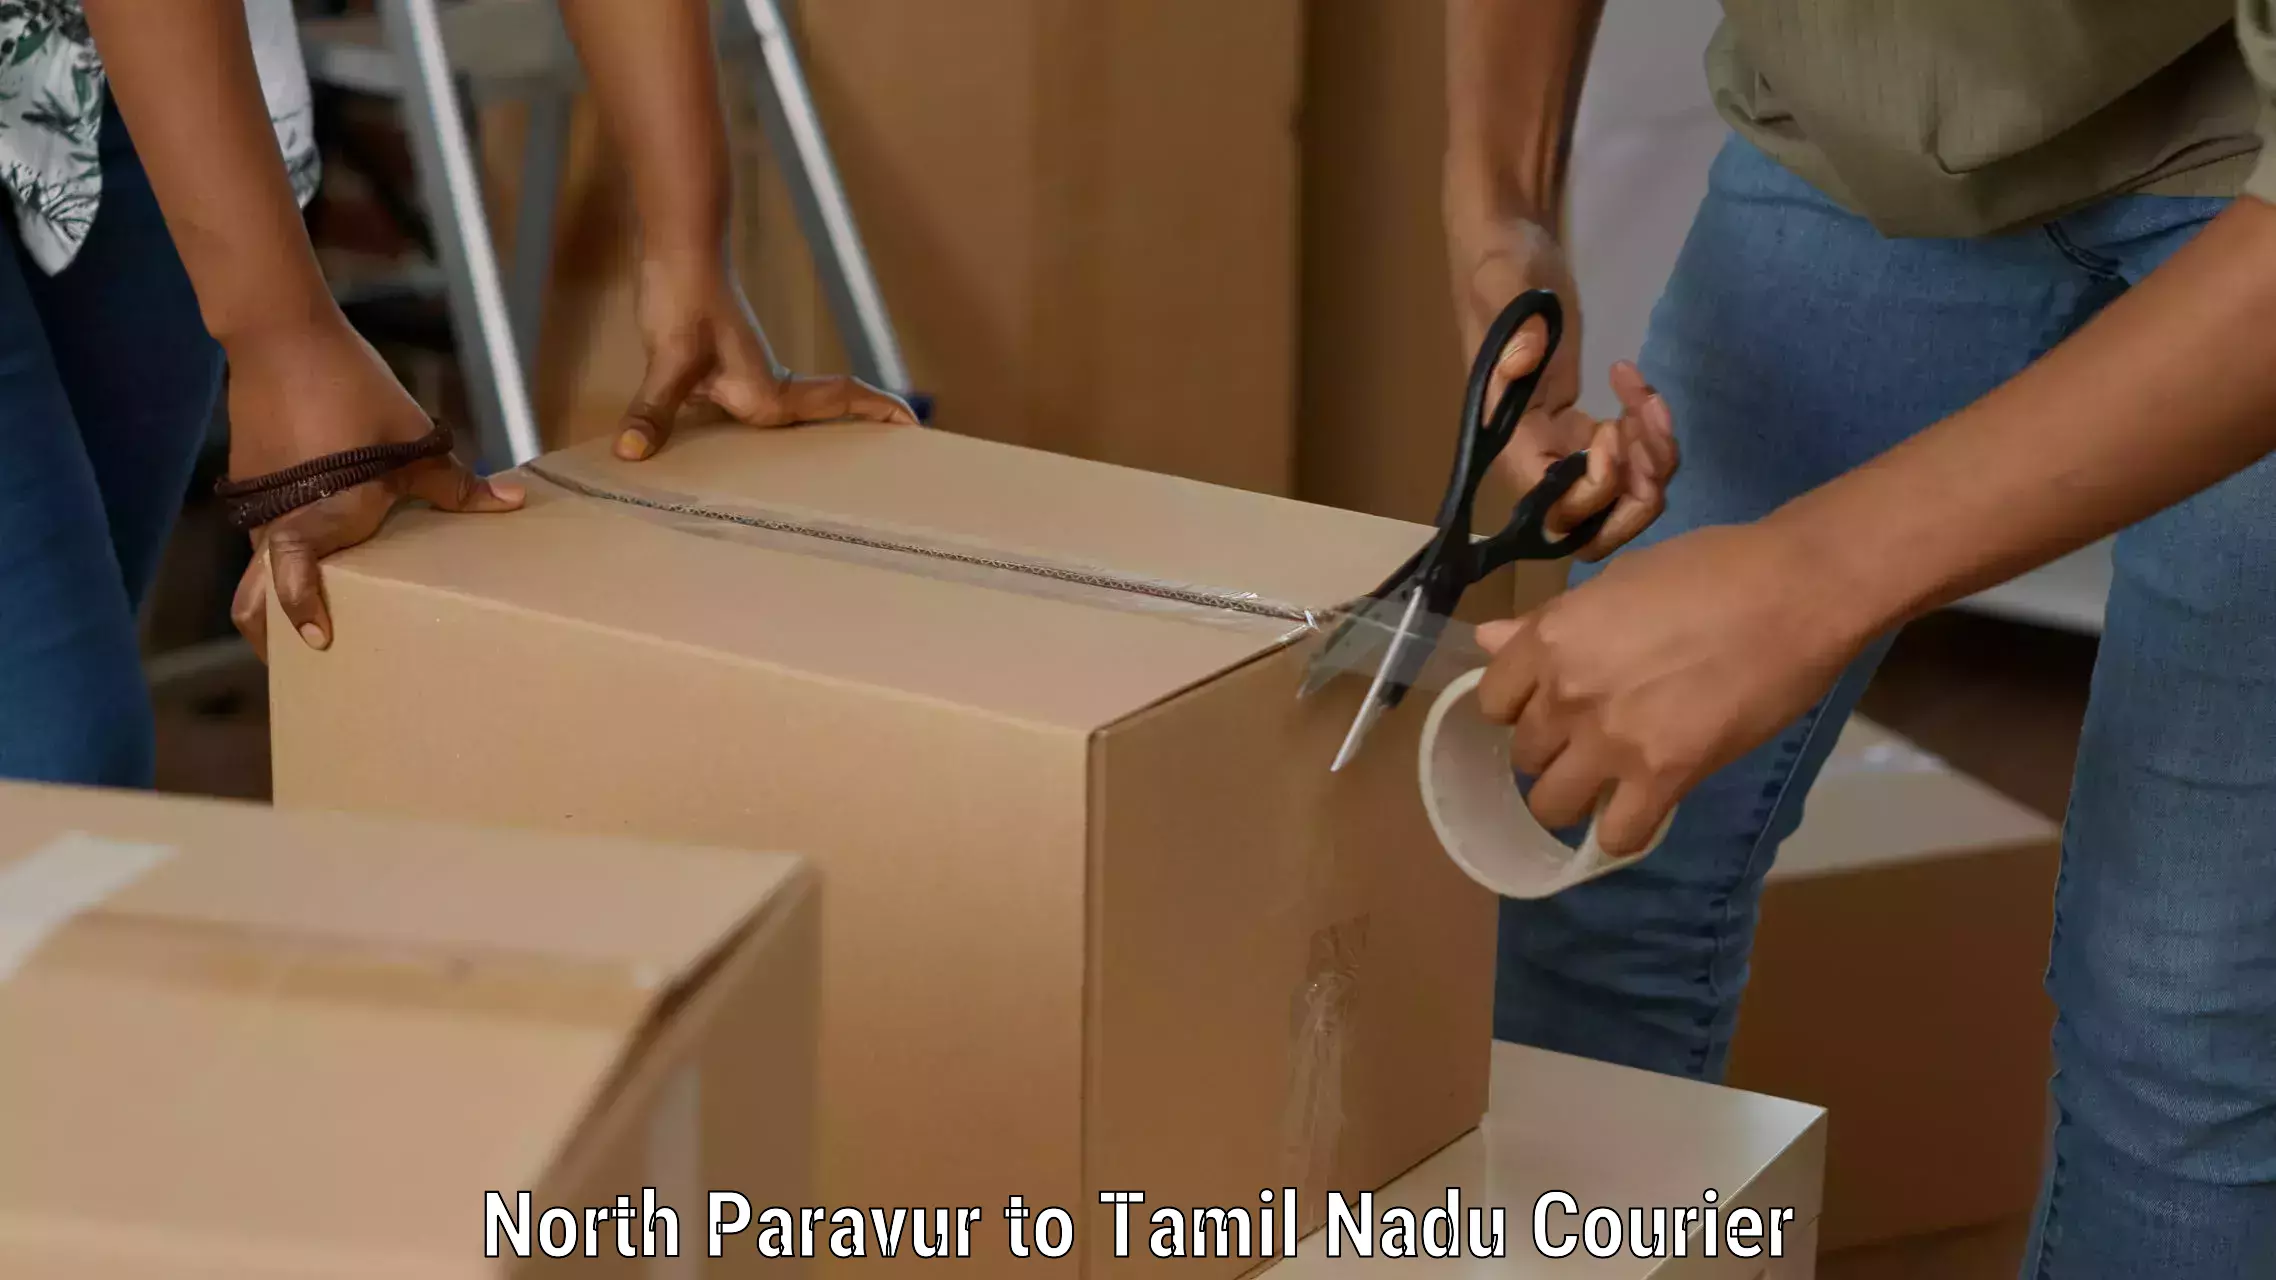 Efficient logistics management North Paravur to Chennai